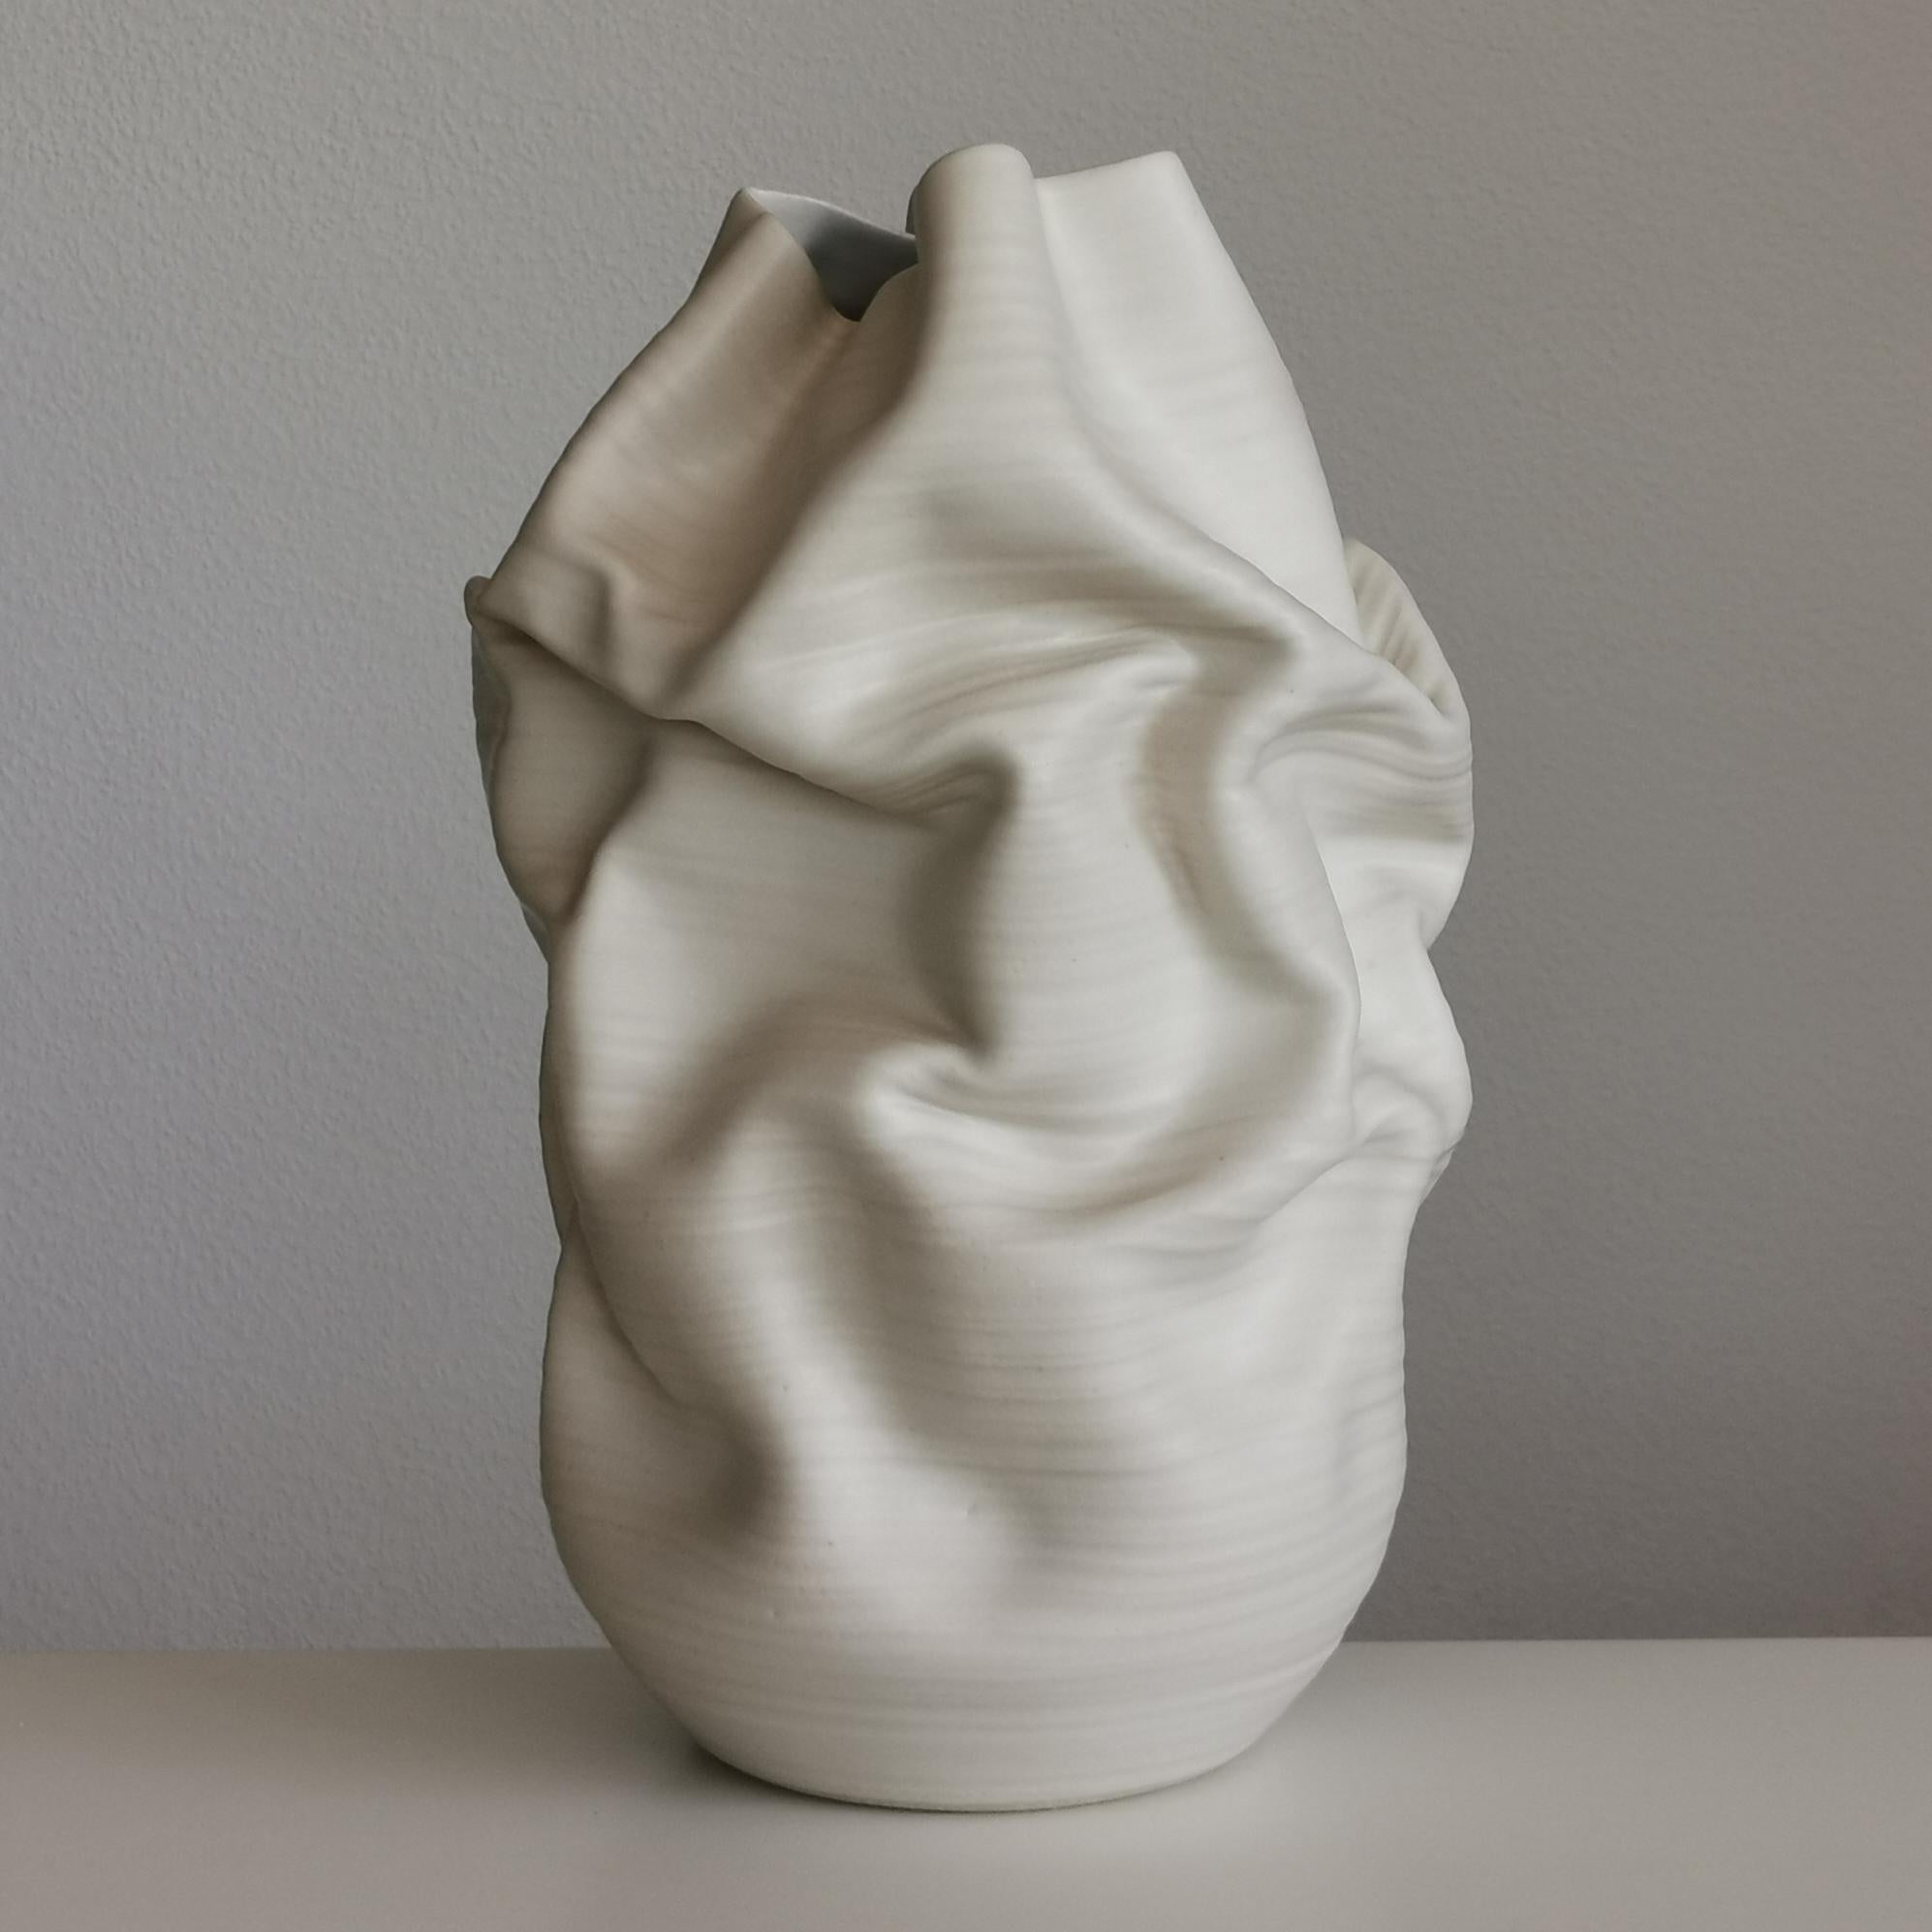 Hand-Crafted White Crumpled Form No 37, Ceramic Vessel by Nicholas Arroyave-Portela